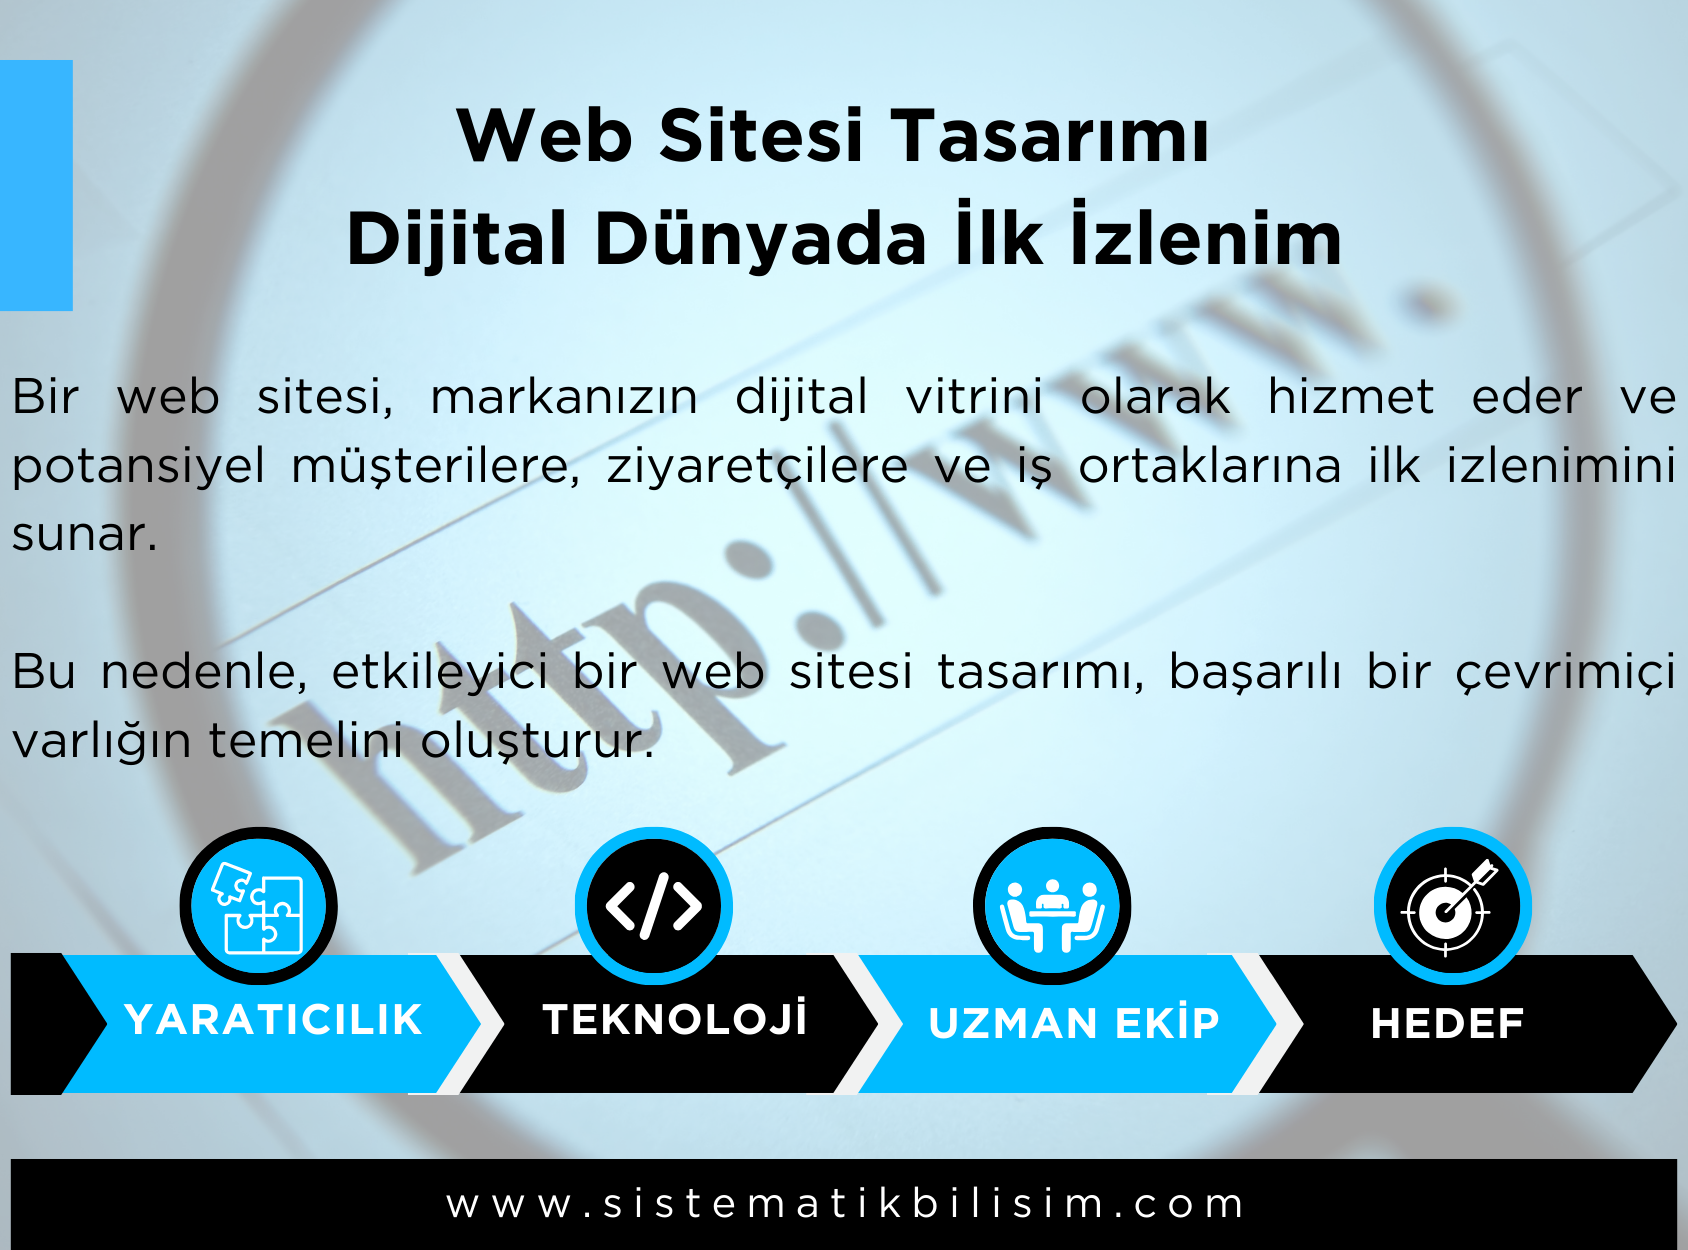 Sistematik Web Sitesi